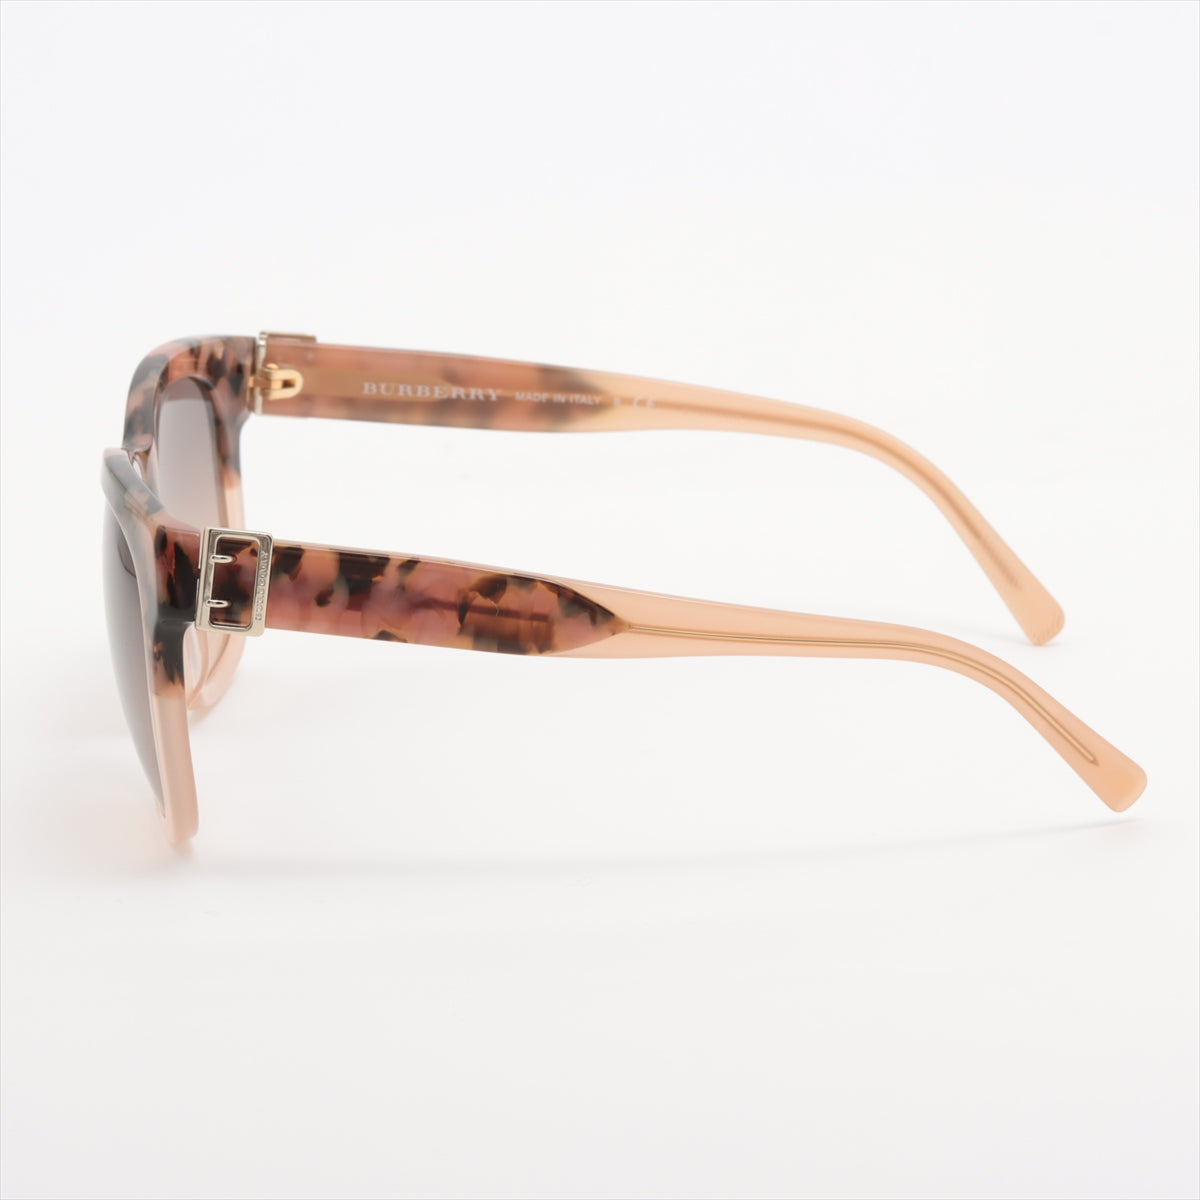 Burberry Sunglasses Plastic Beige B4258-F